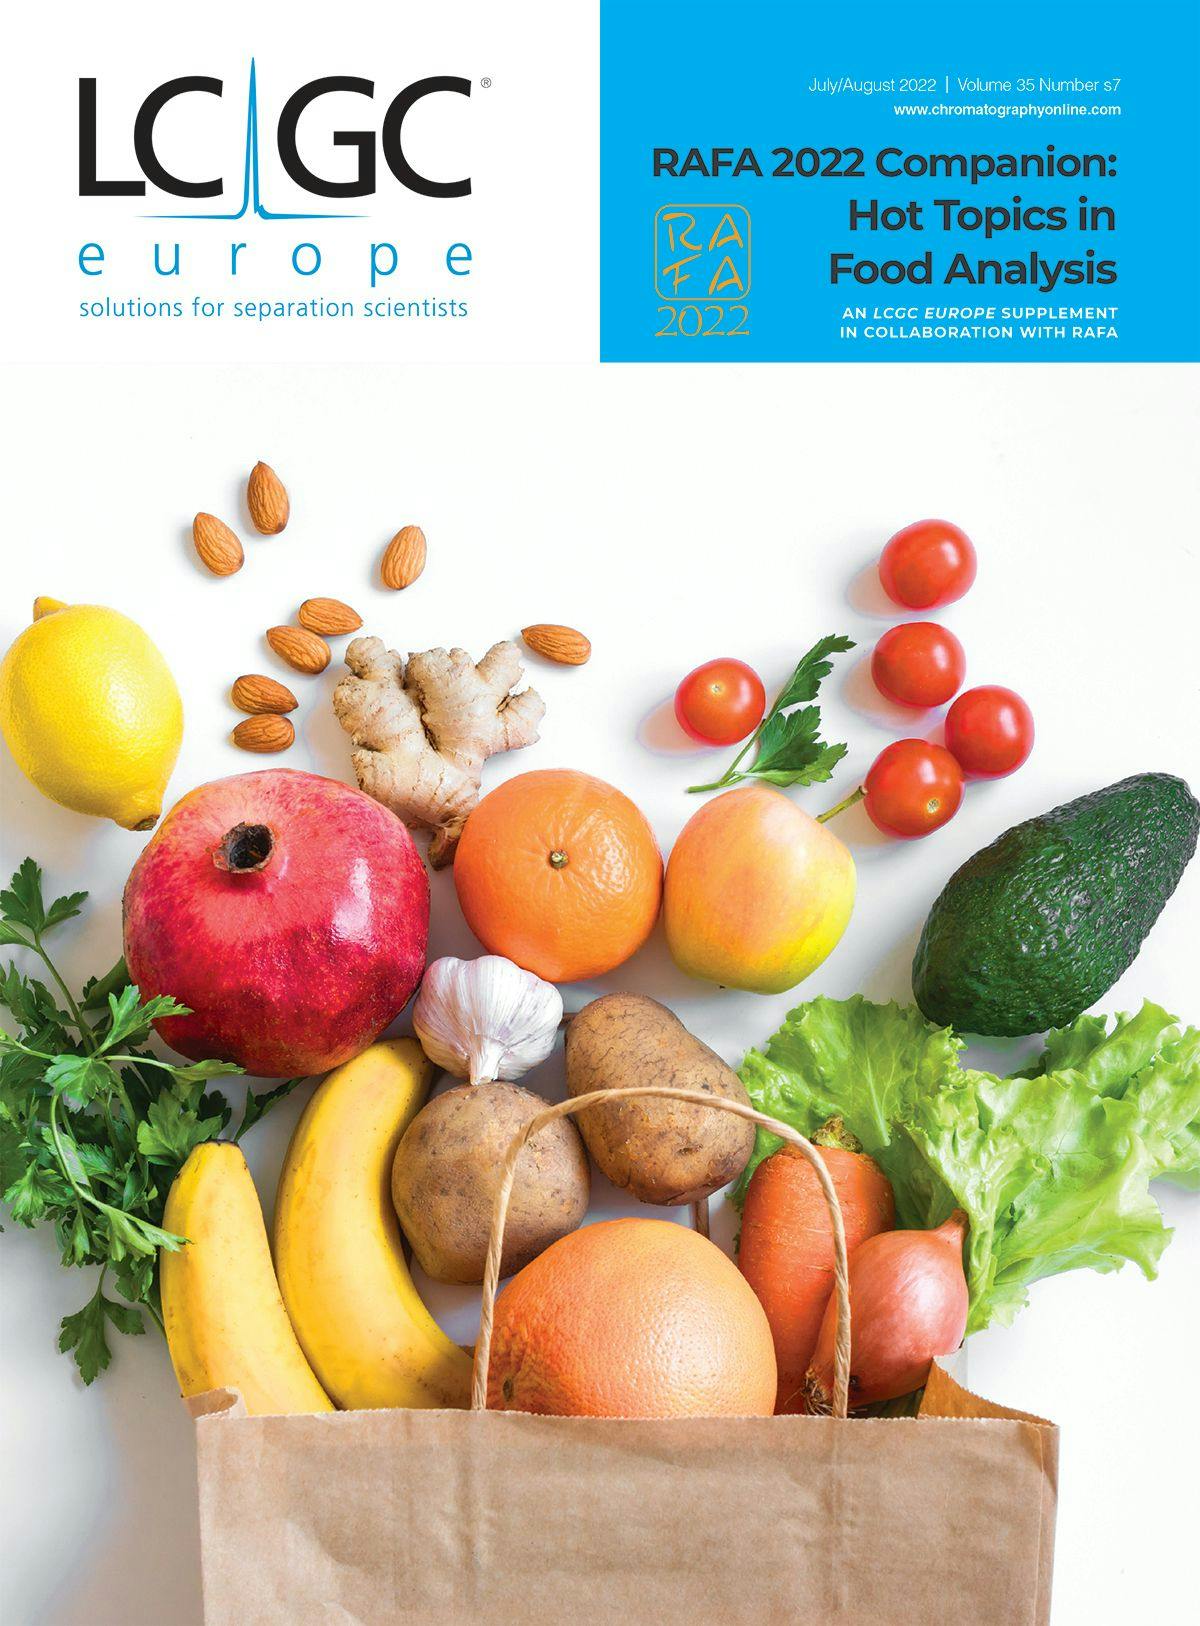 RAFA 2022 Companion: Hot Topics in Food Analysis